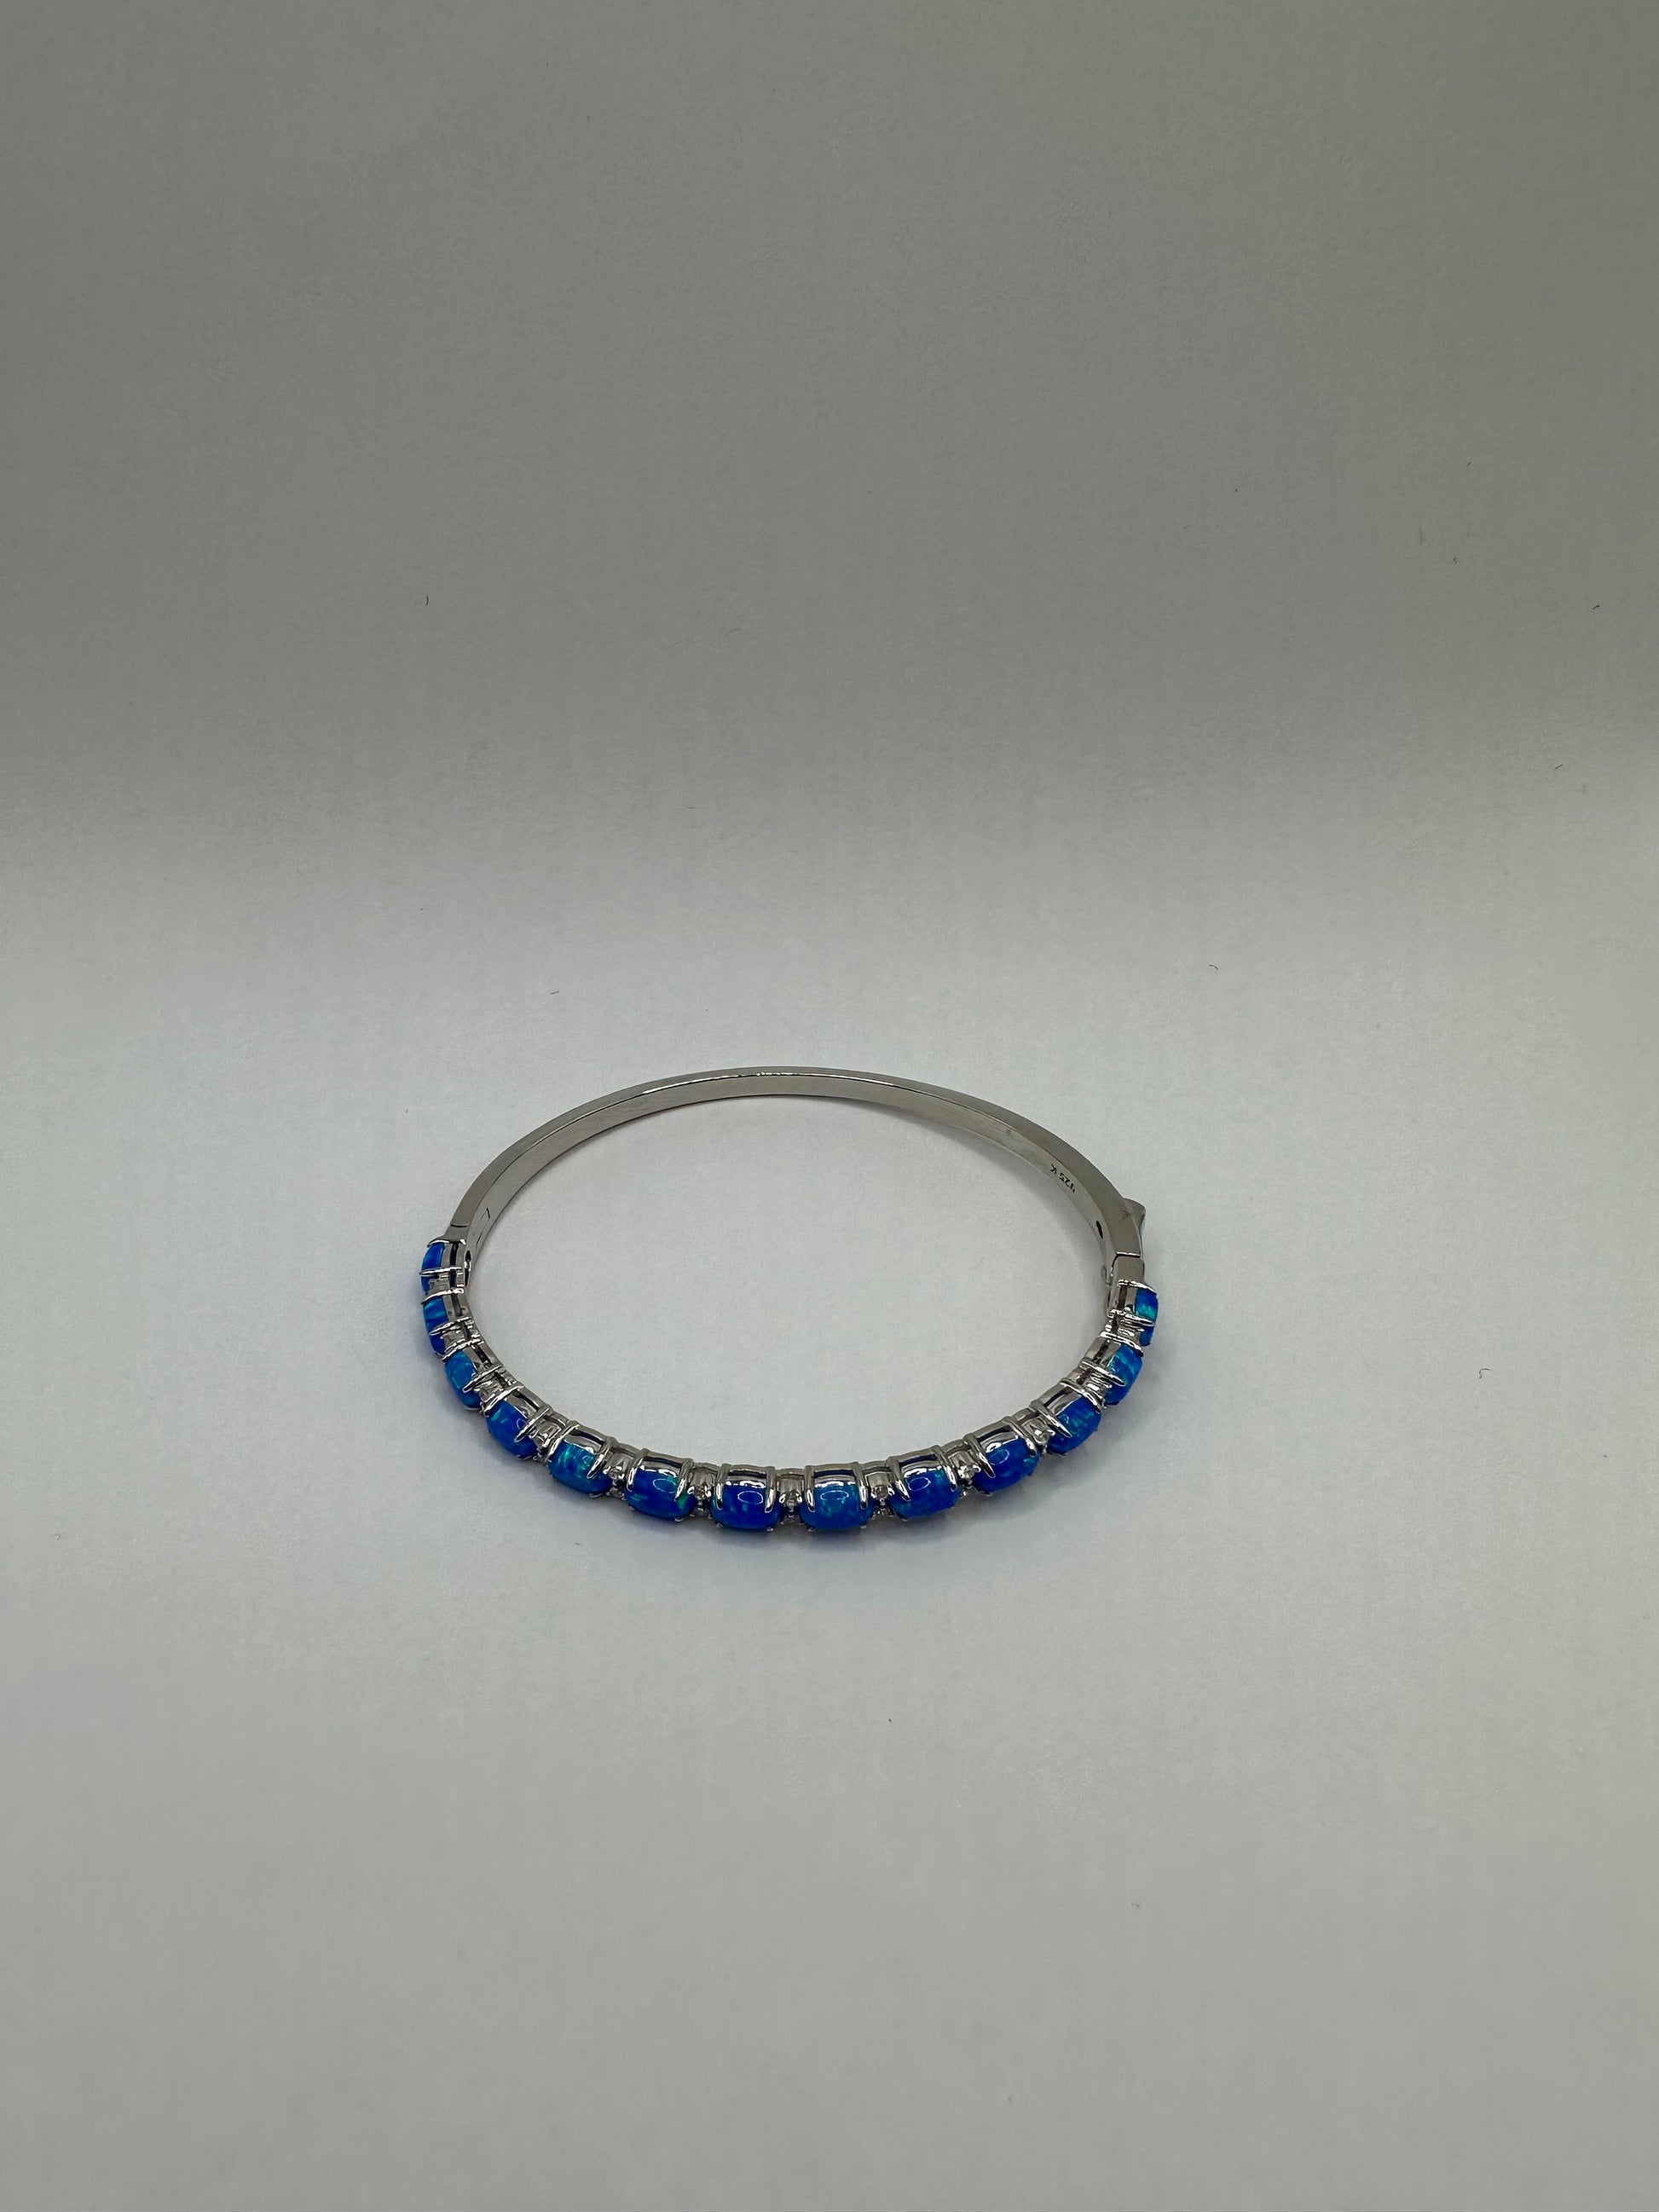 Vintage Blue Fire Opal Bangle Cuff Bracelet 925 Sterling Silver